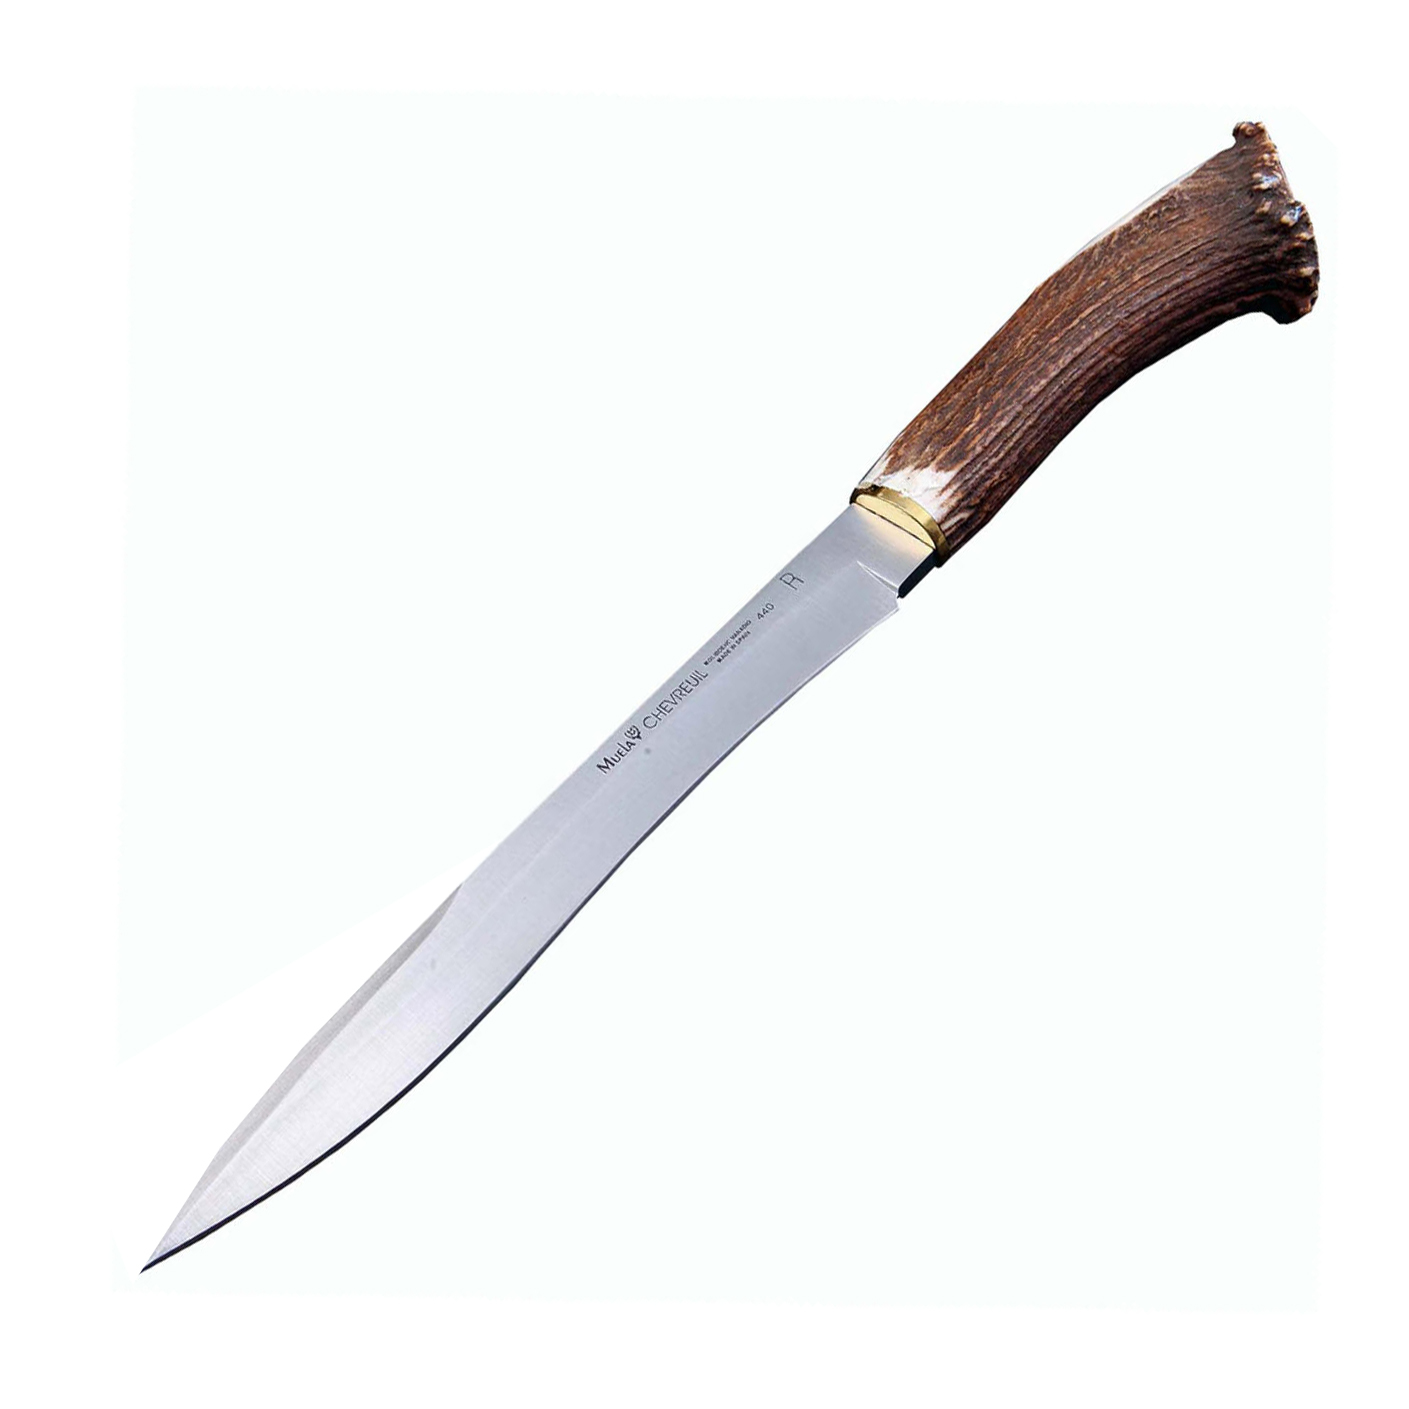 Нож с фиксированным клинком Chevreuil, Stag Handle 21.0 см.